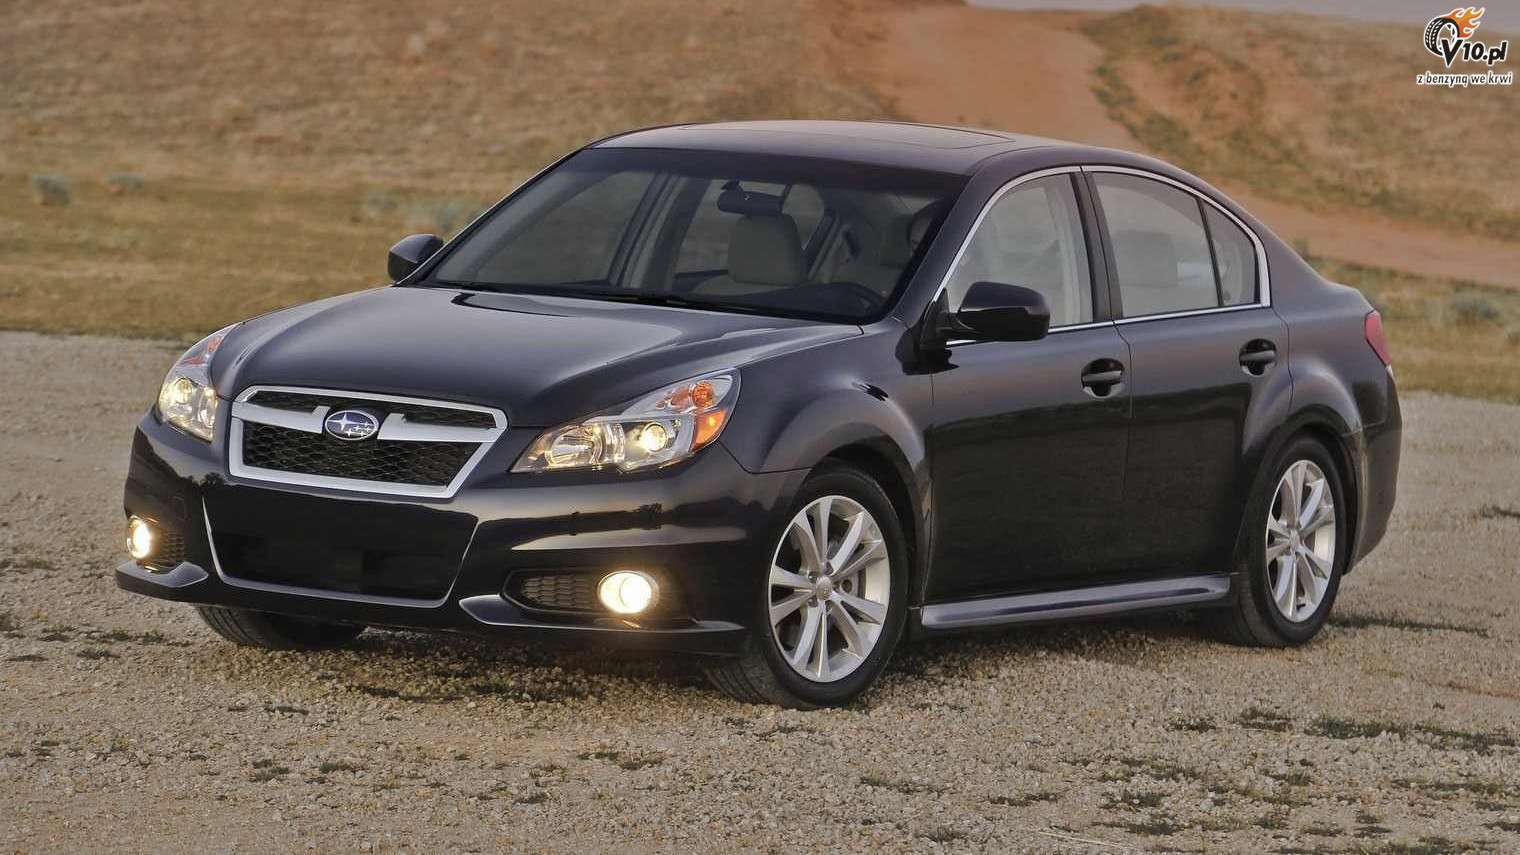 2012 Subaru legacy vs ford fusion #9